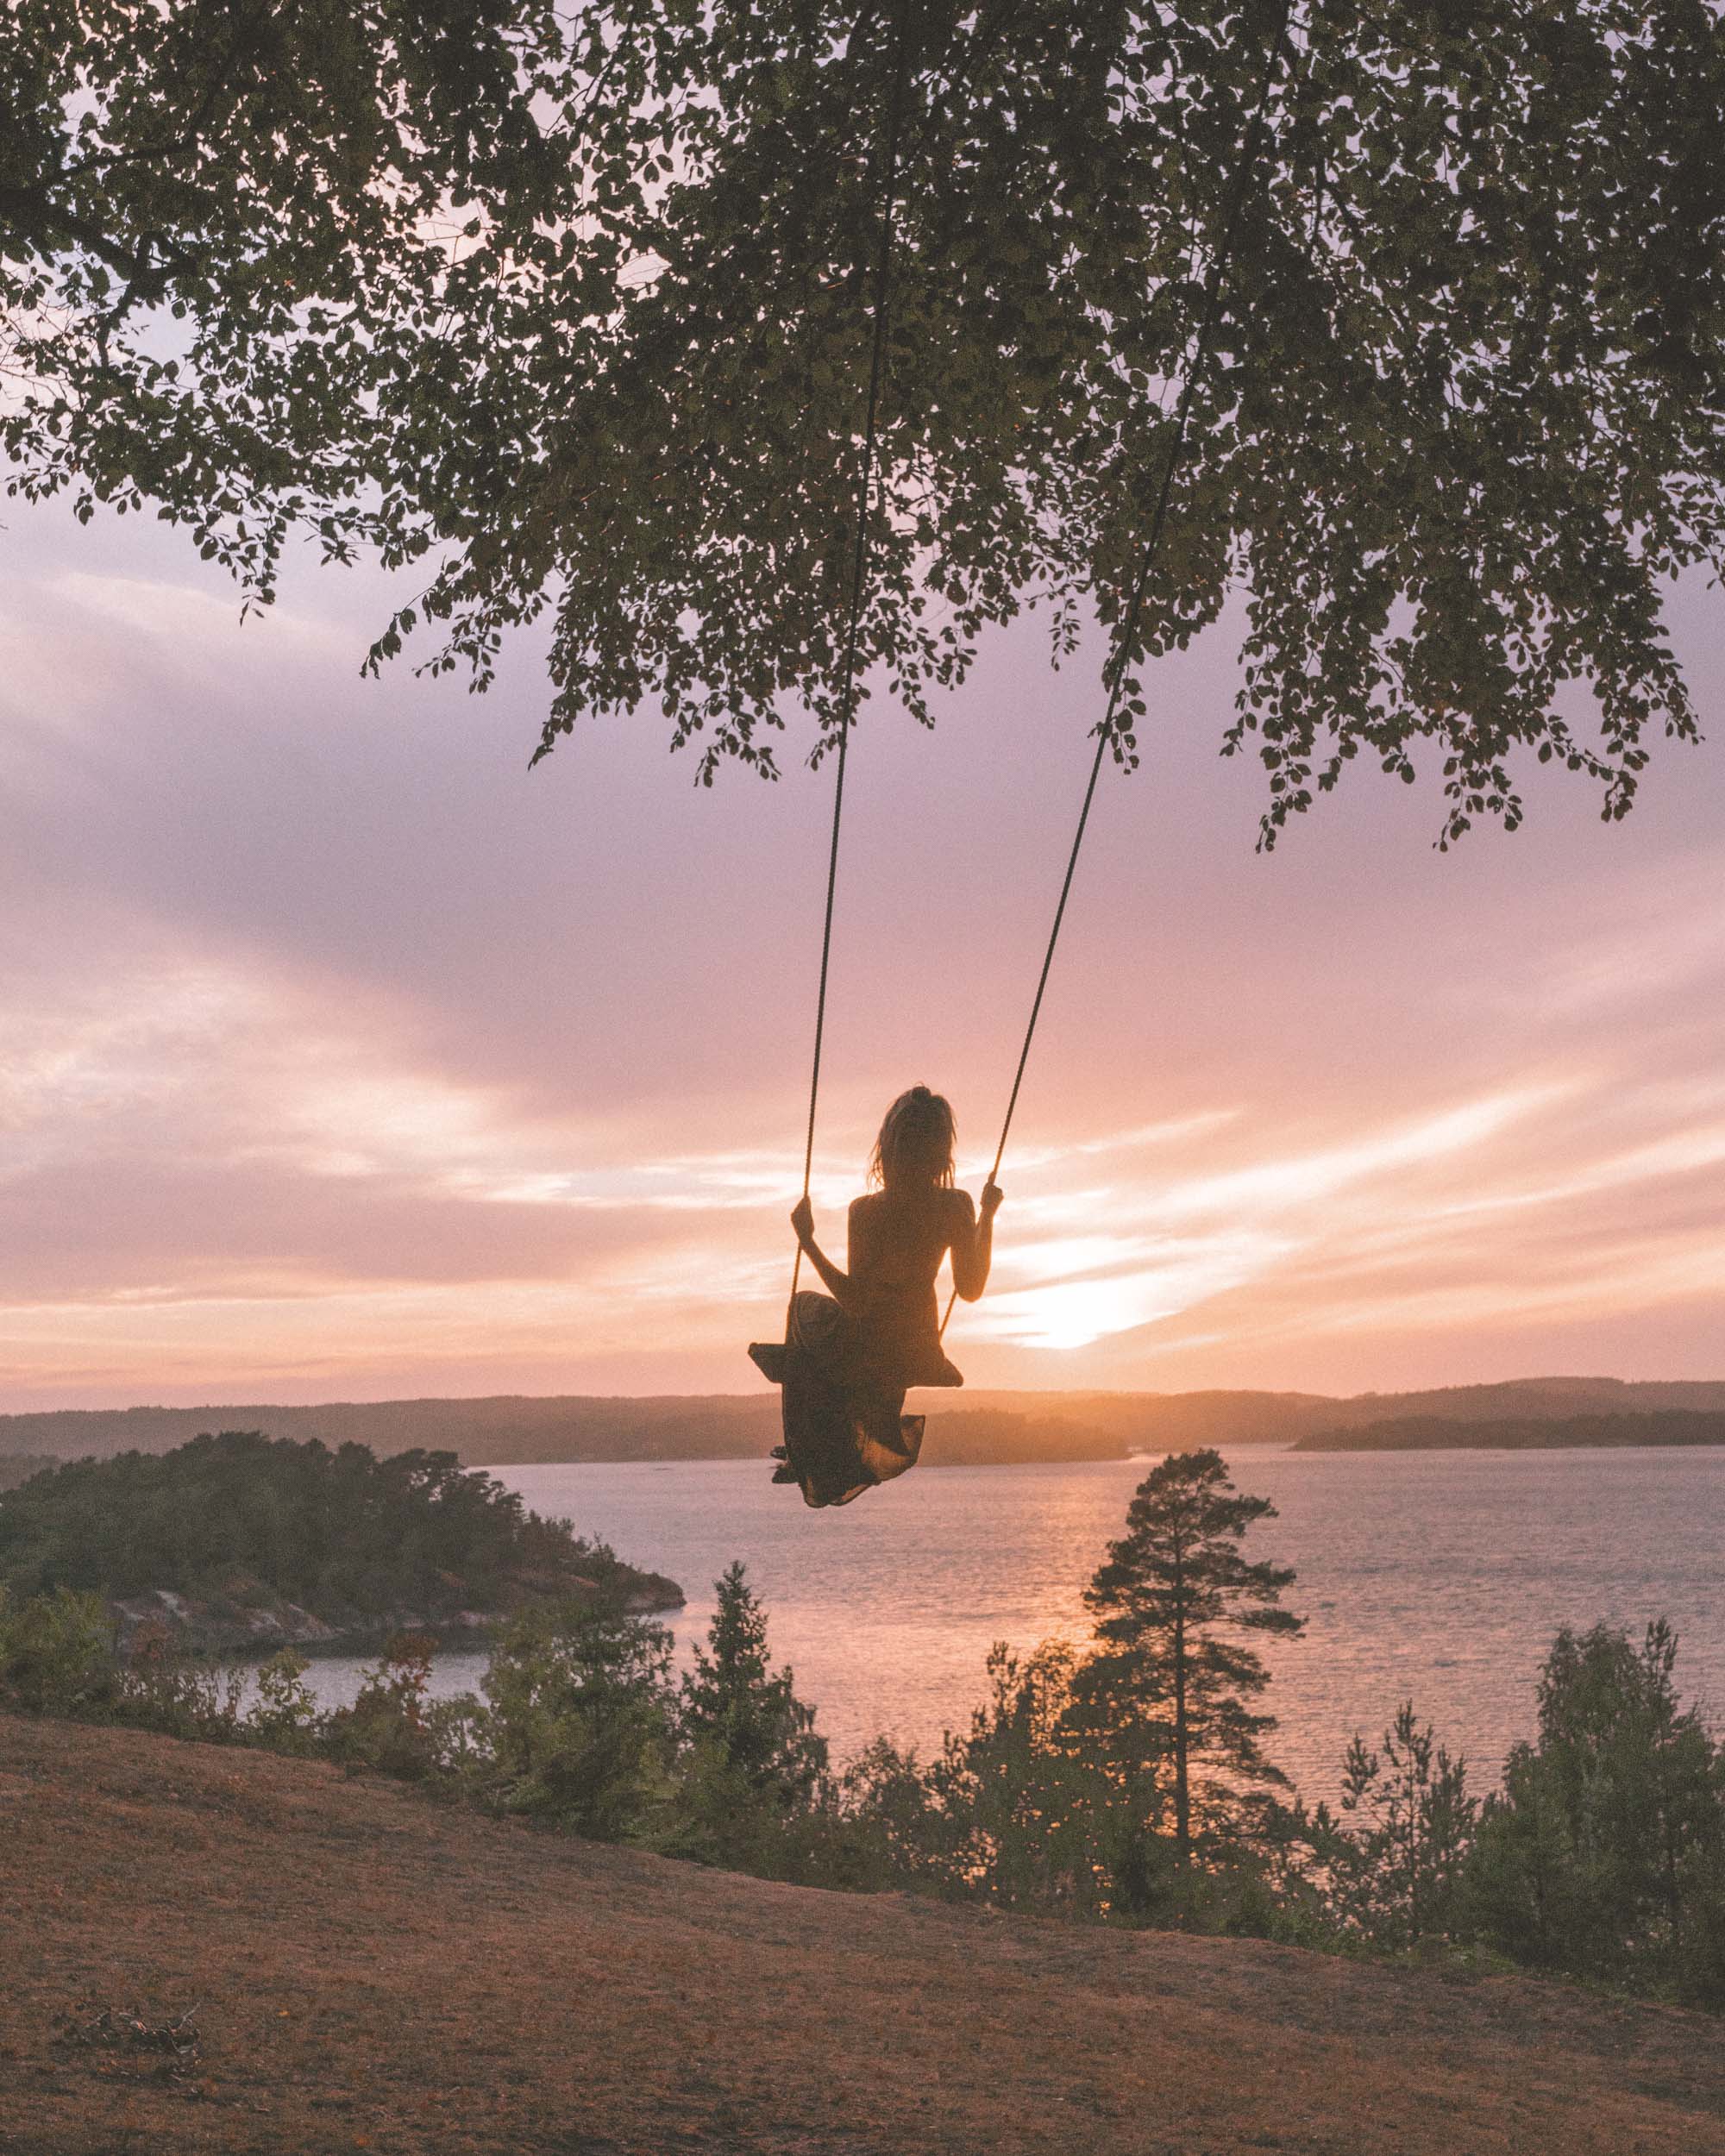 Swinging into the sunset over the west coast of Sweden in Ljungskile | West Sweden Travel Guide via @finduslost